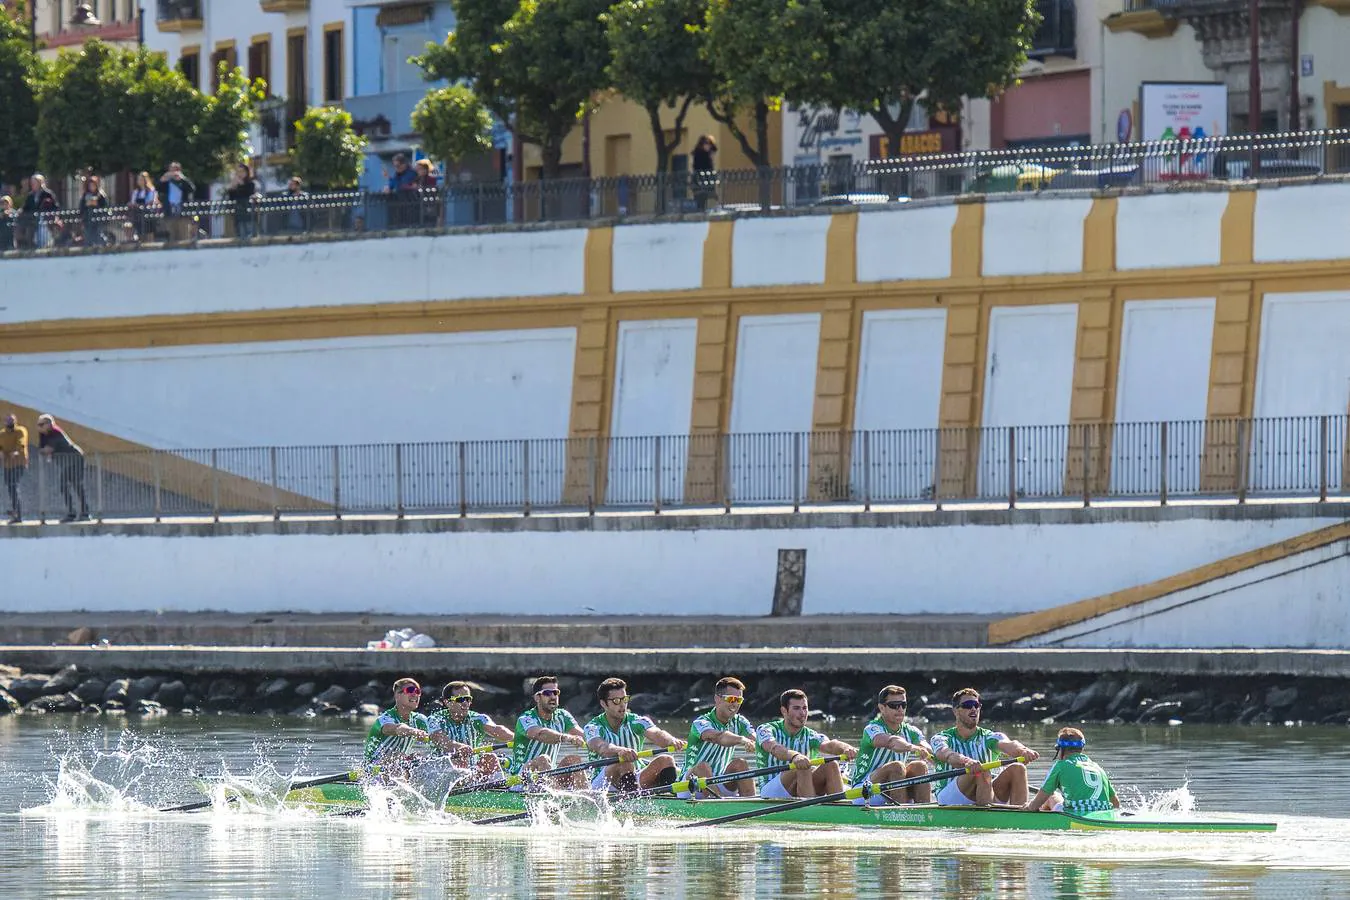 Espectaculares imágenes de la Regata Sevilla-Betis